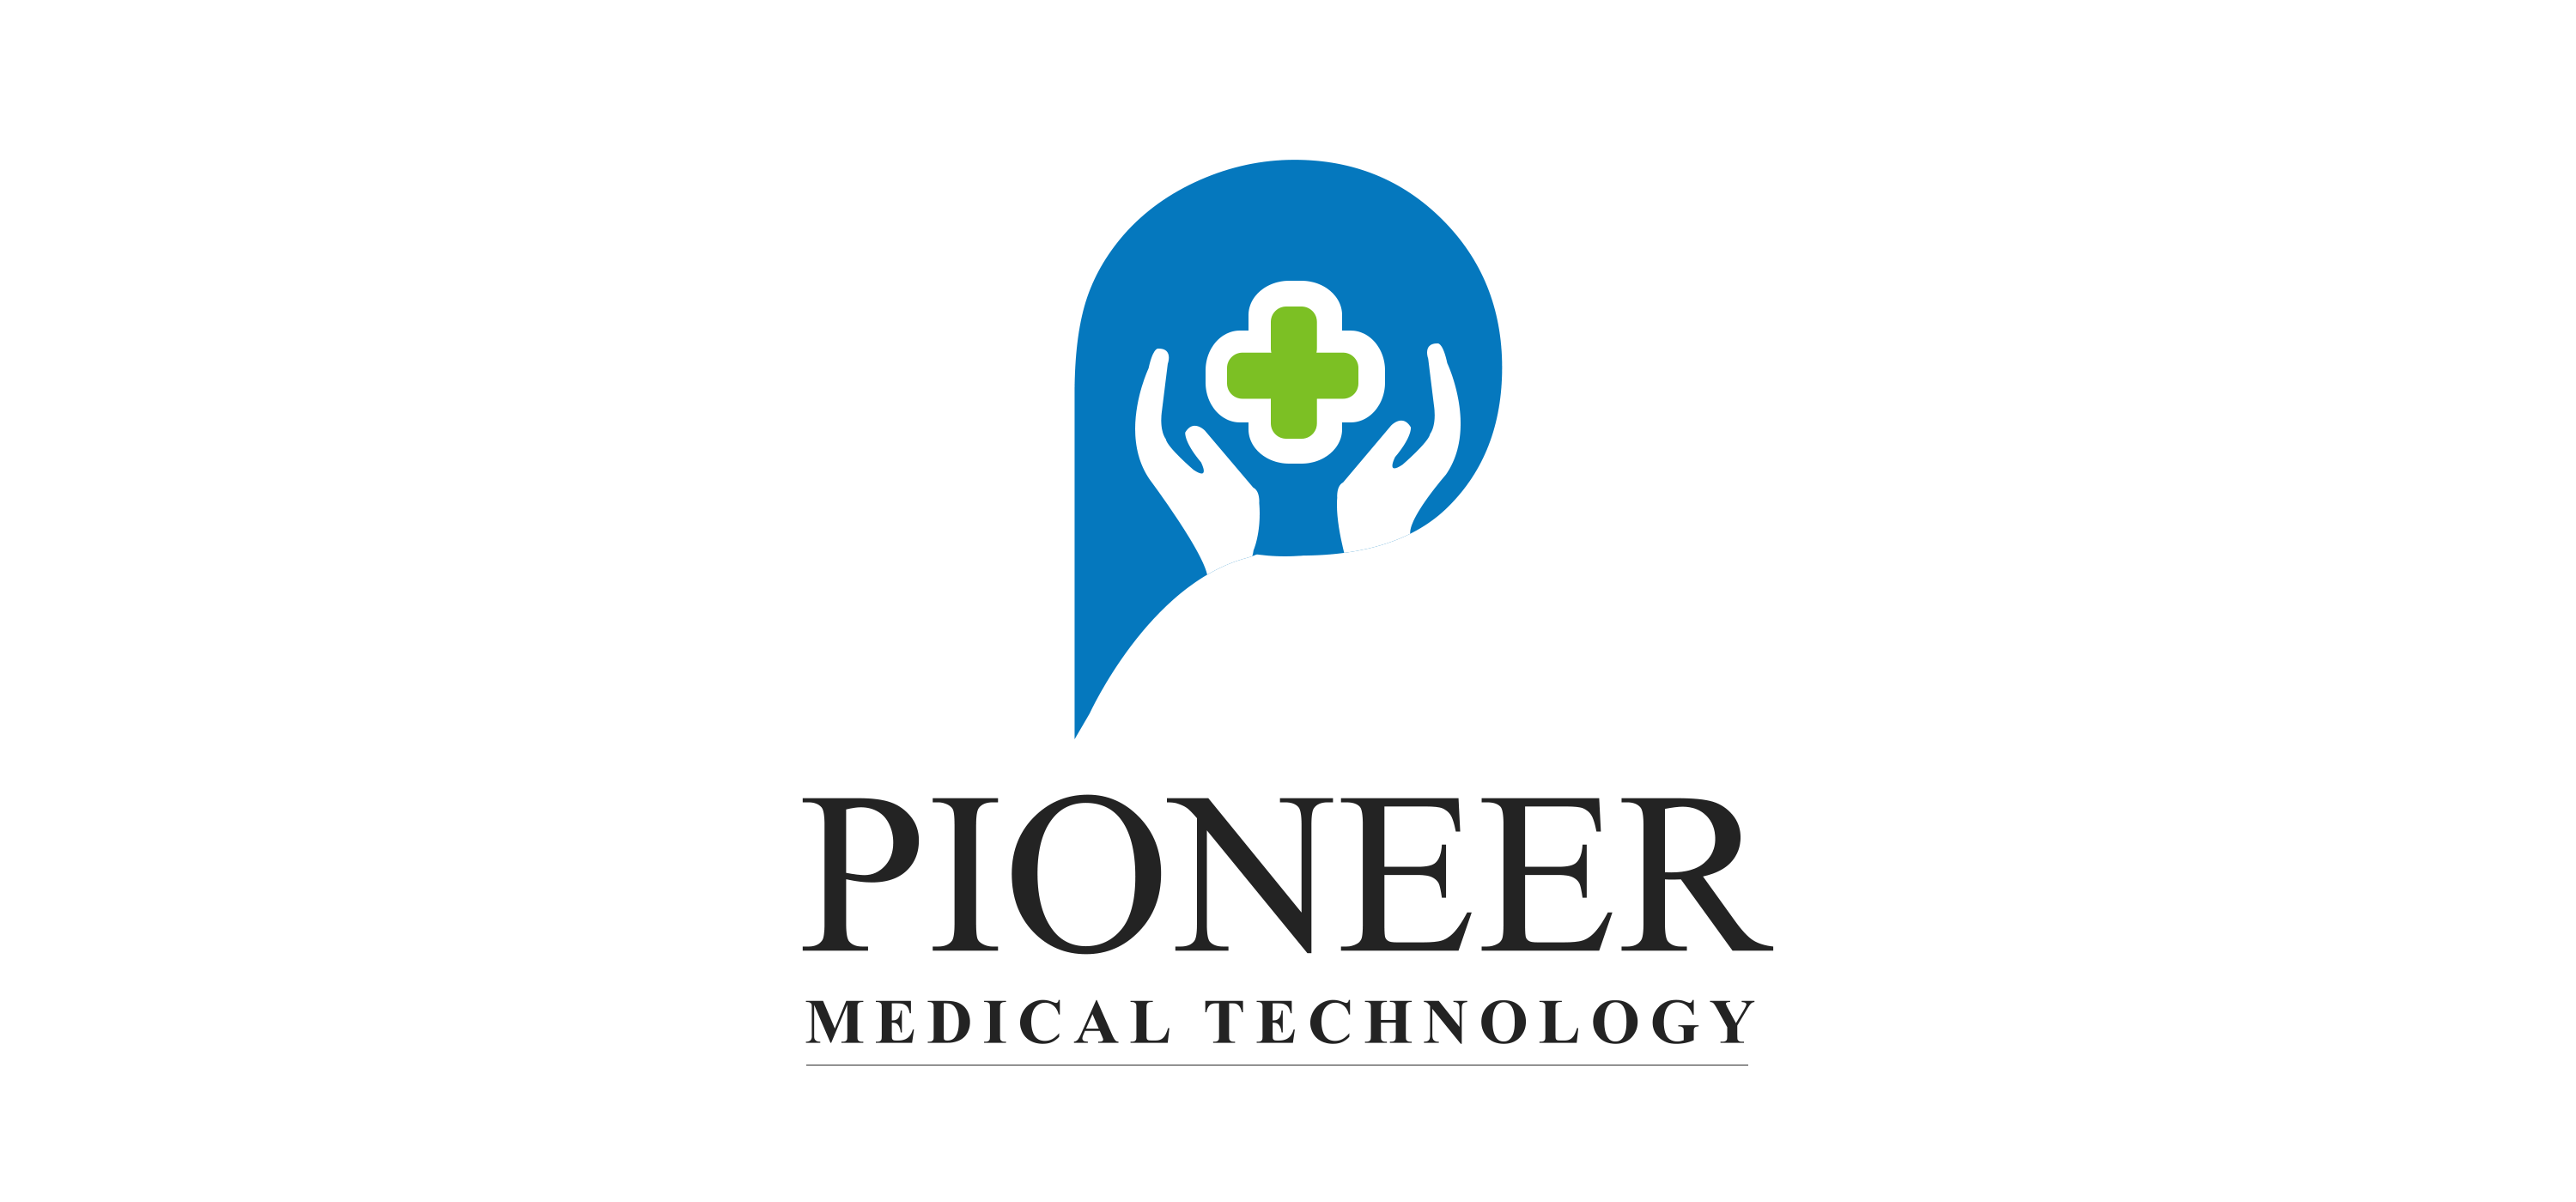 Medical Technology Logo - PIONEER MEDICAL TECHNOLOGY